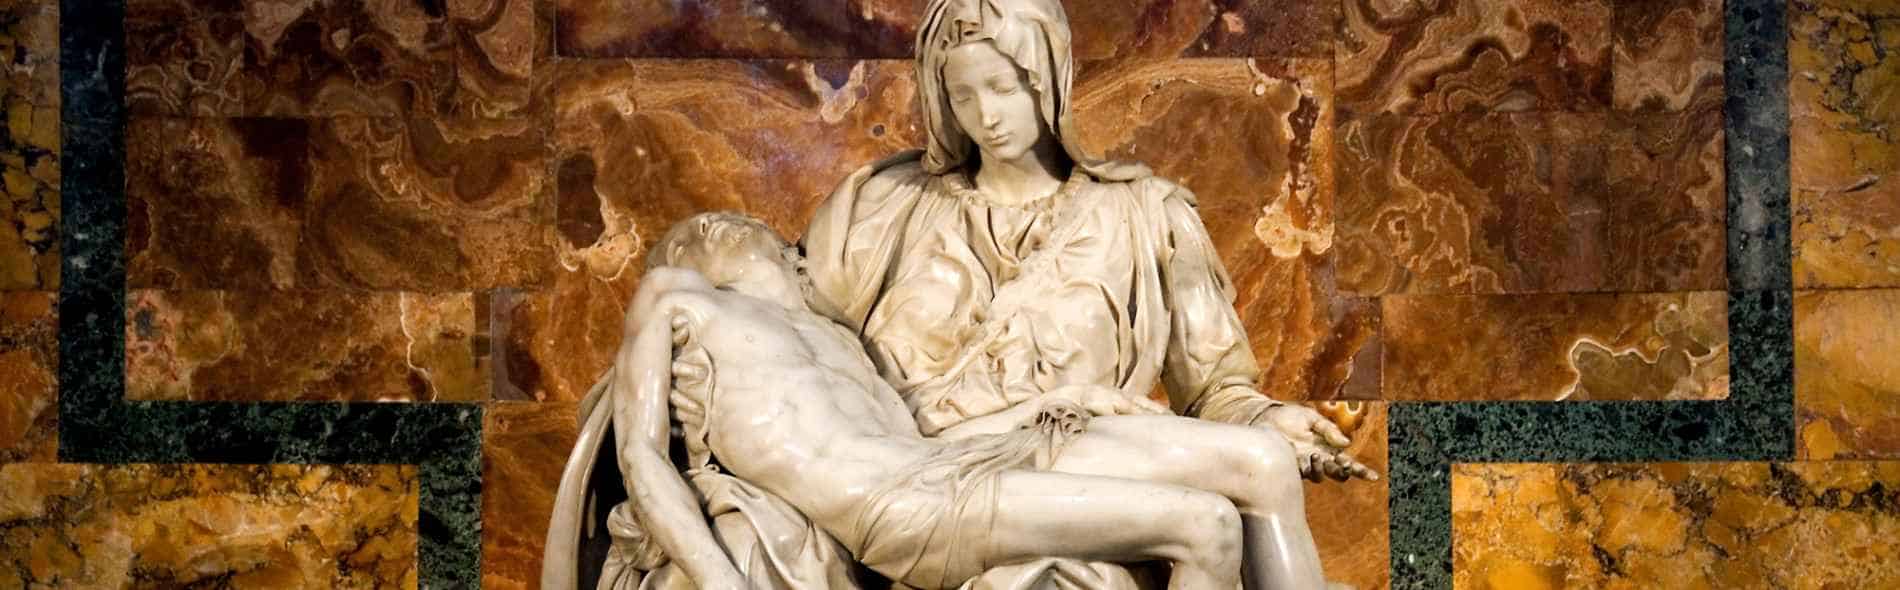 Michelangelo's Pietà, Saint Peter's Basilica, private guided tours